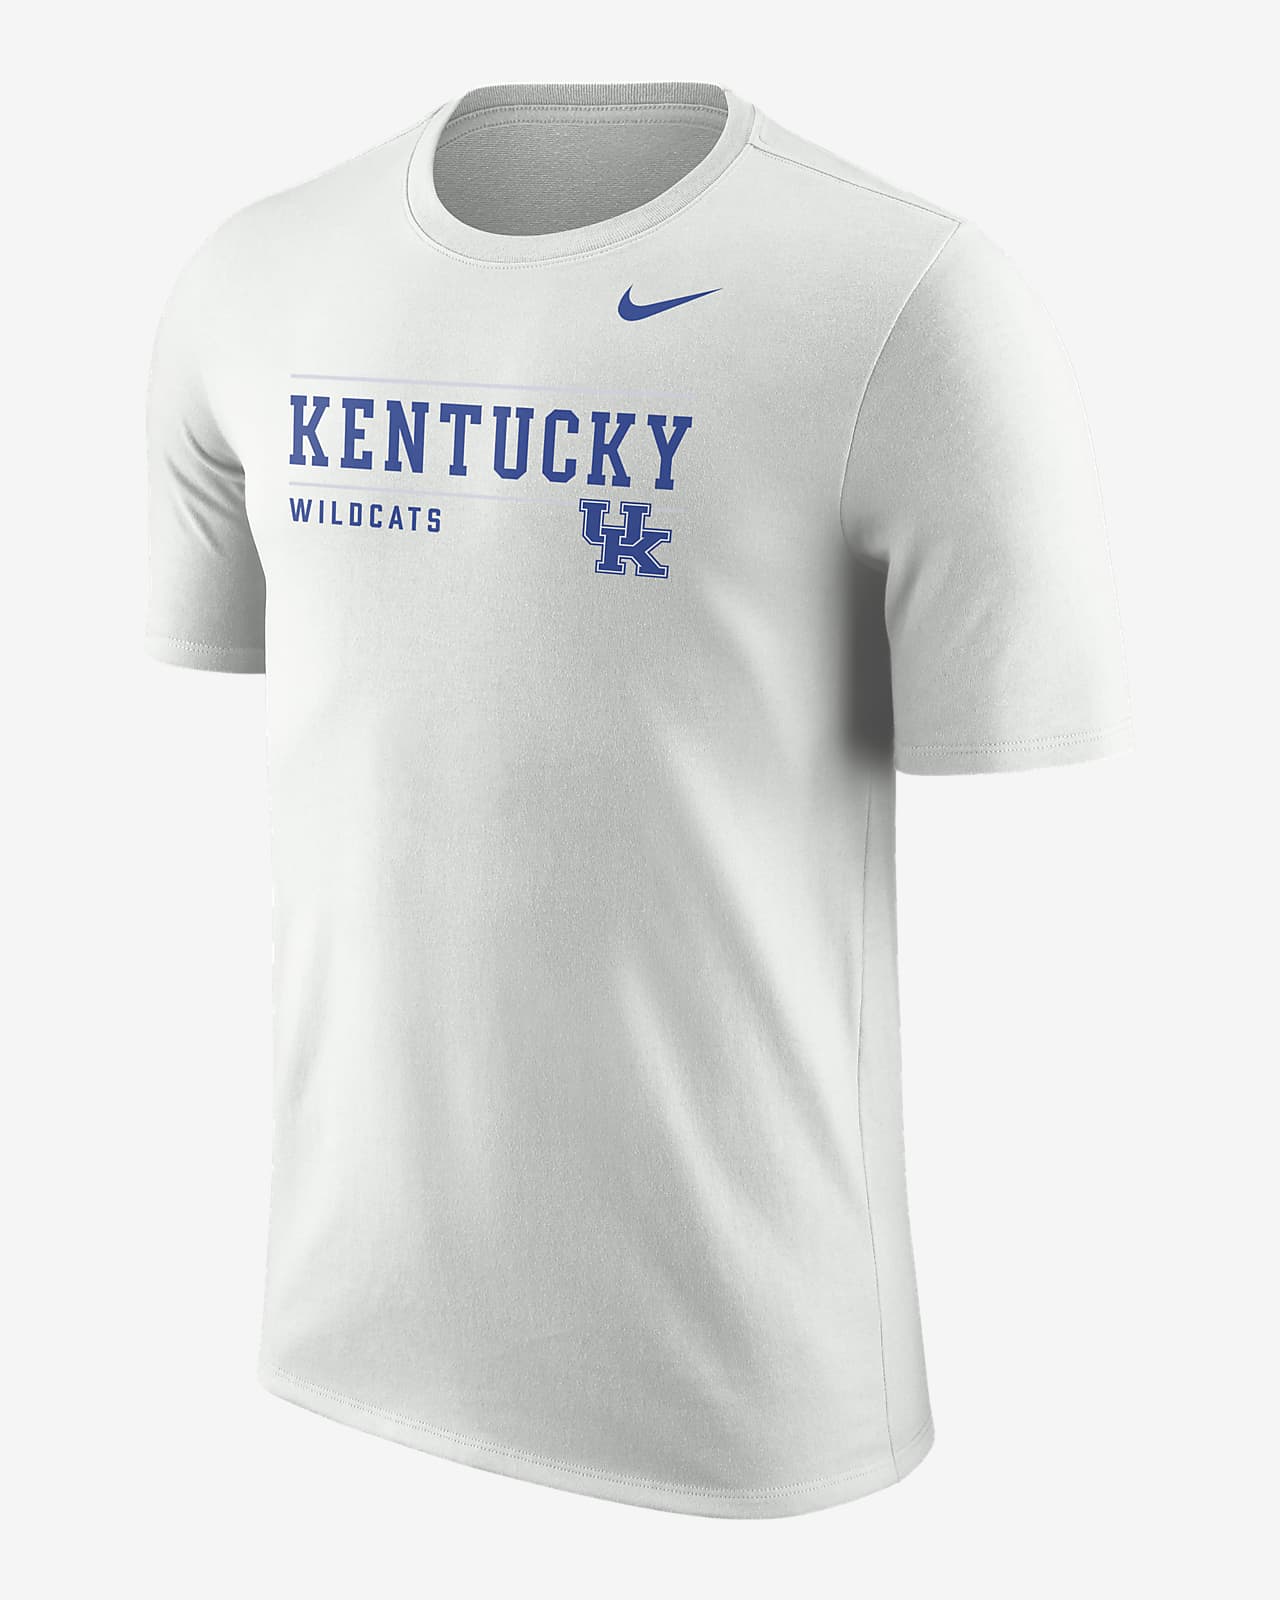 Kentucky Men's Nike College T-Shirt.